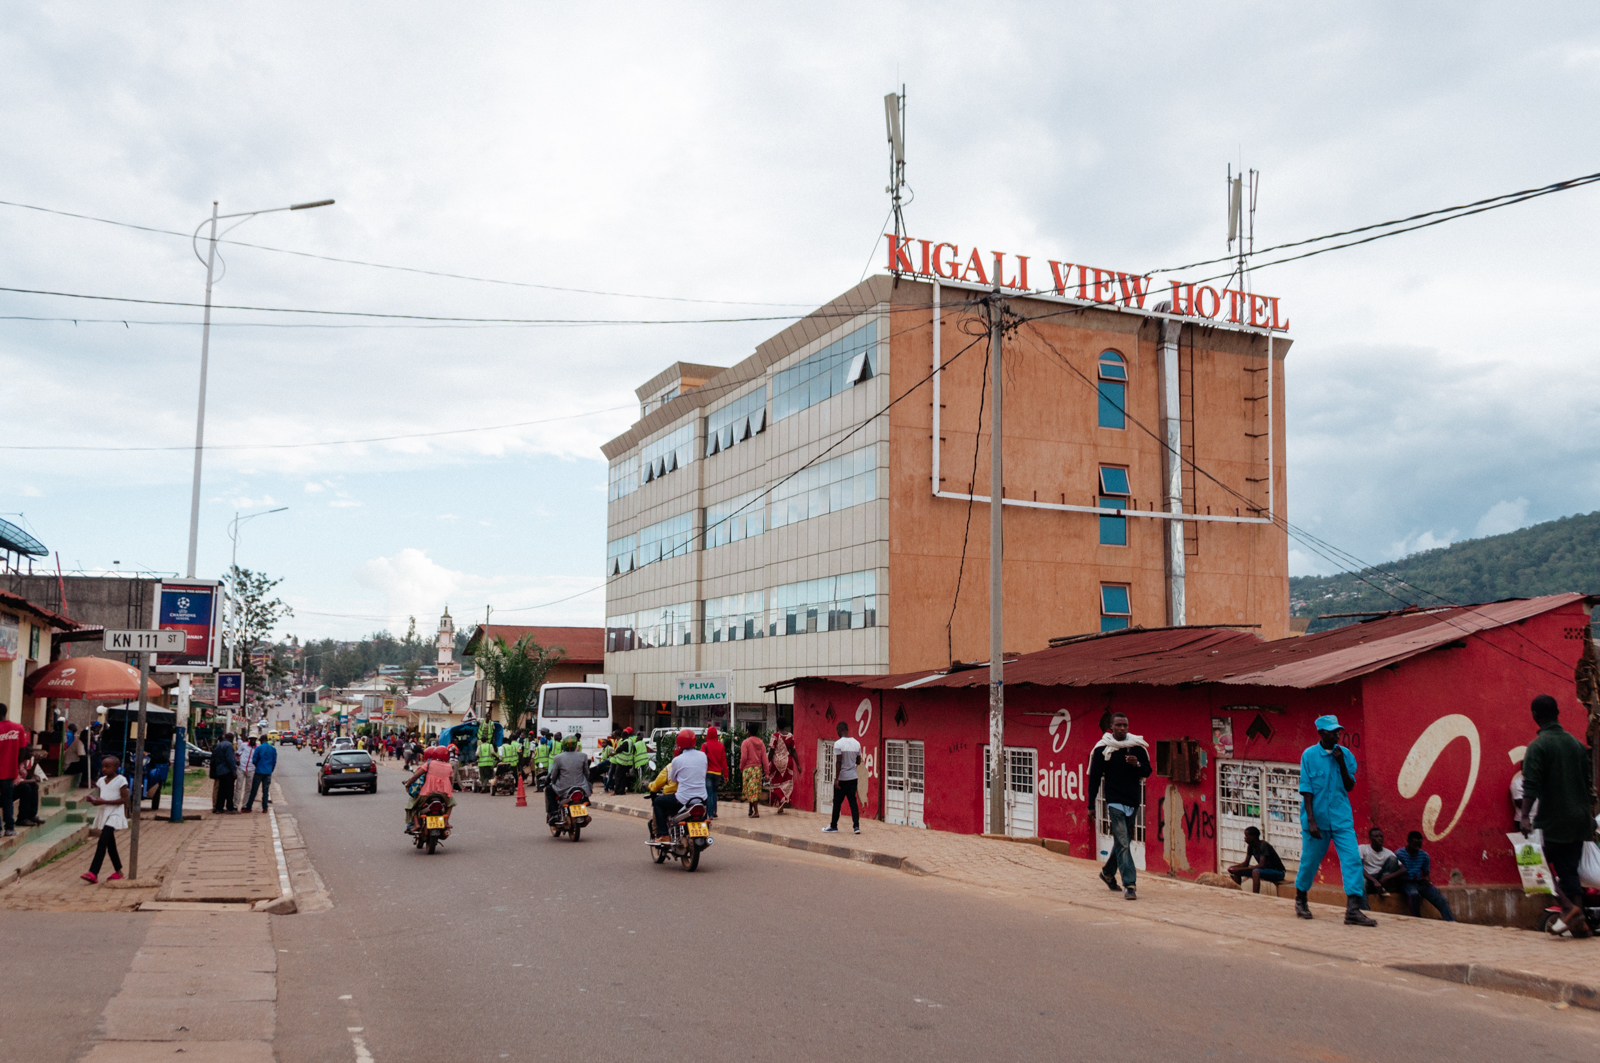 Day 5 Kigali/ Departure